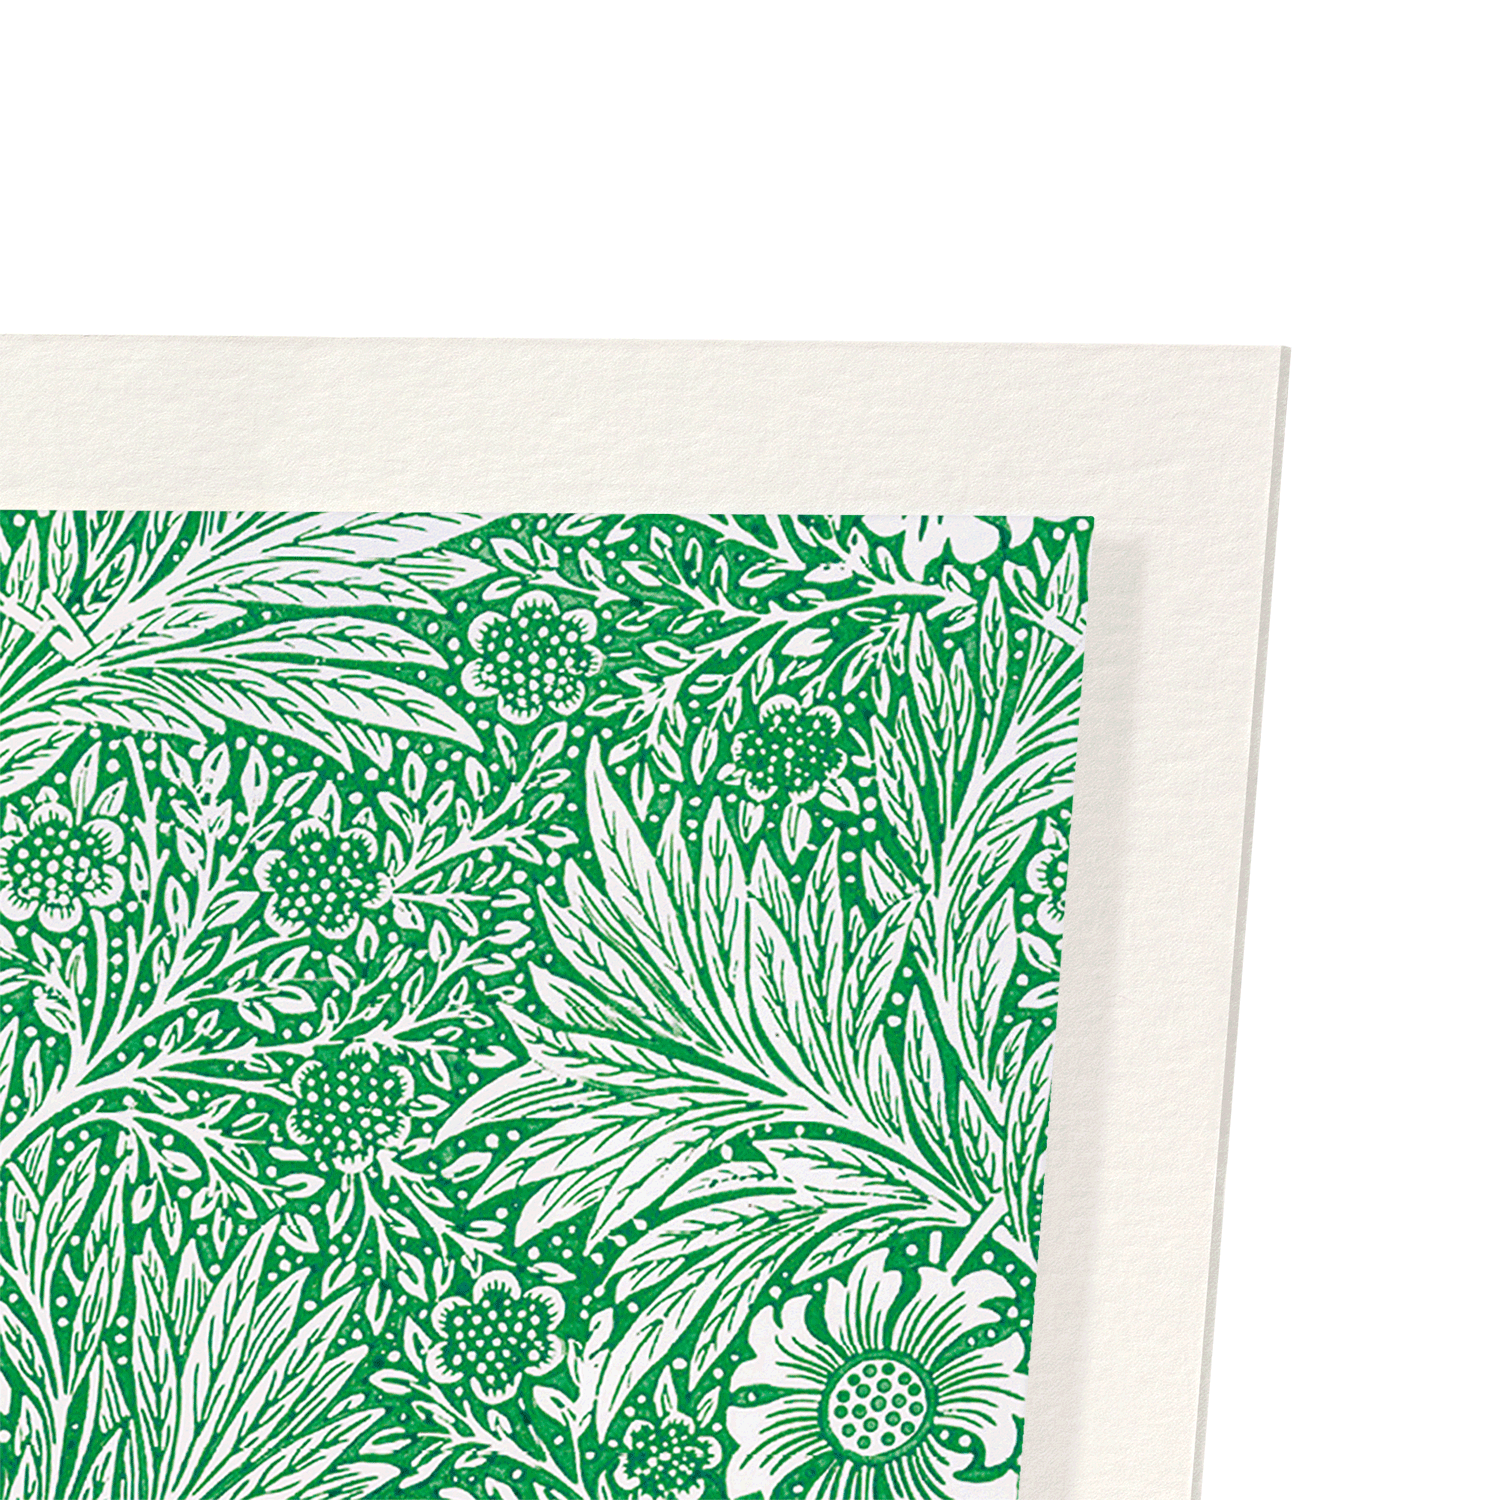 GREEN MARIGOLD: Pattern Art Print